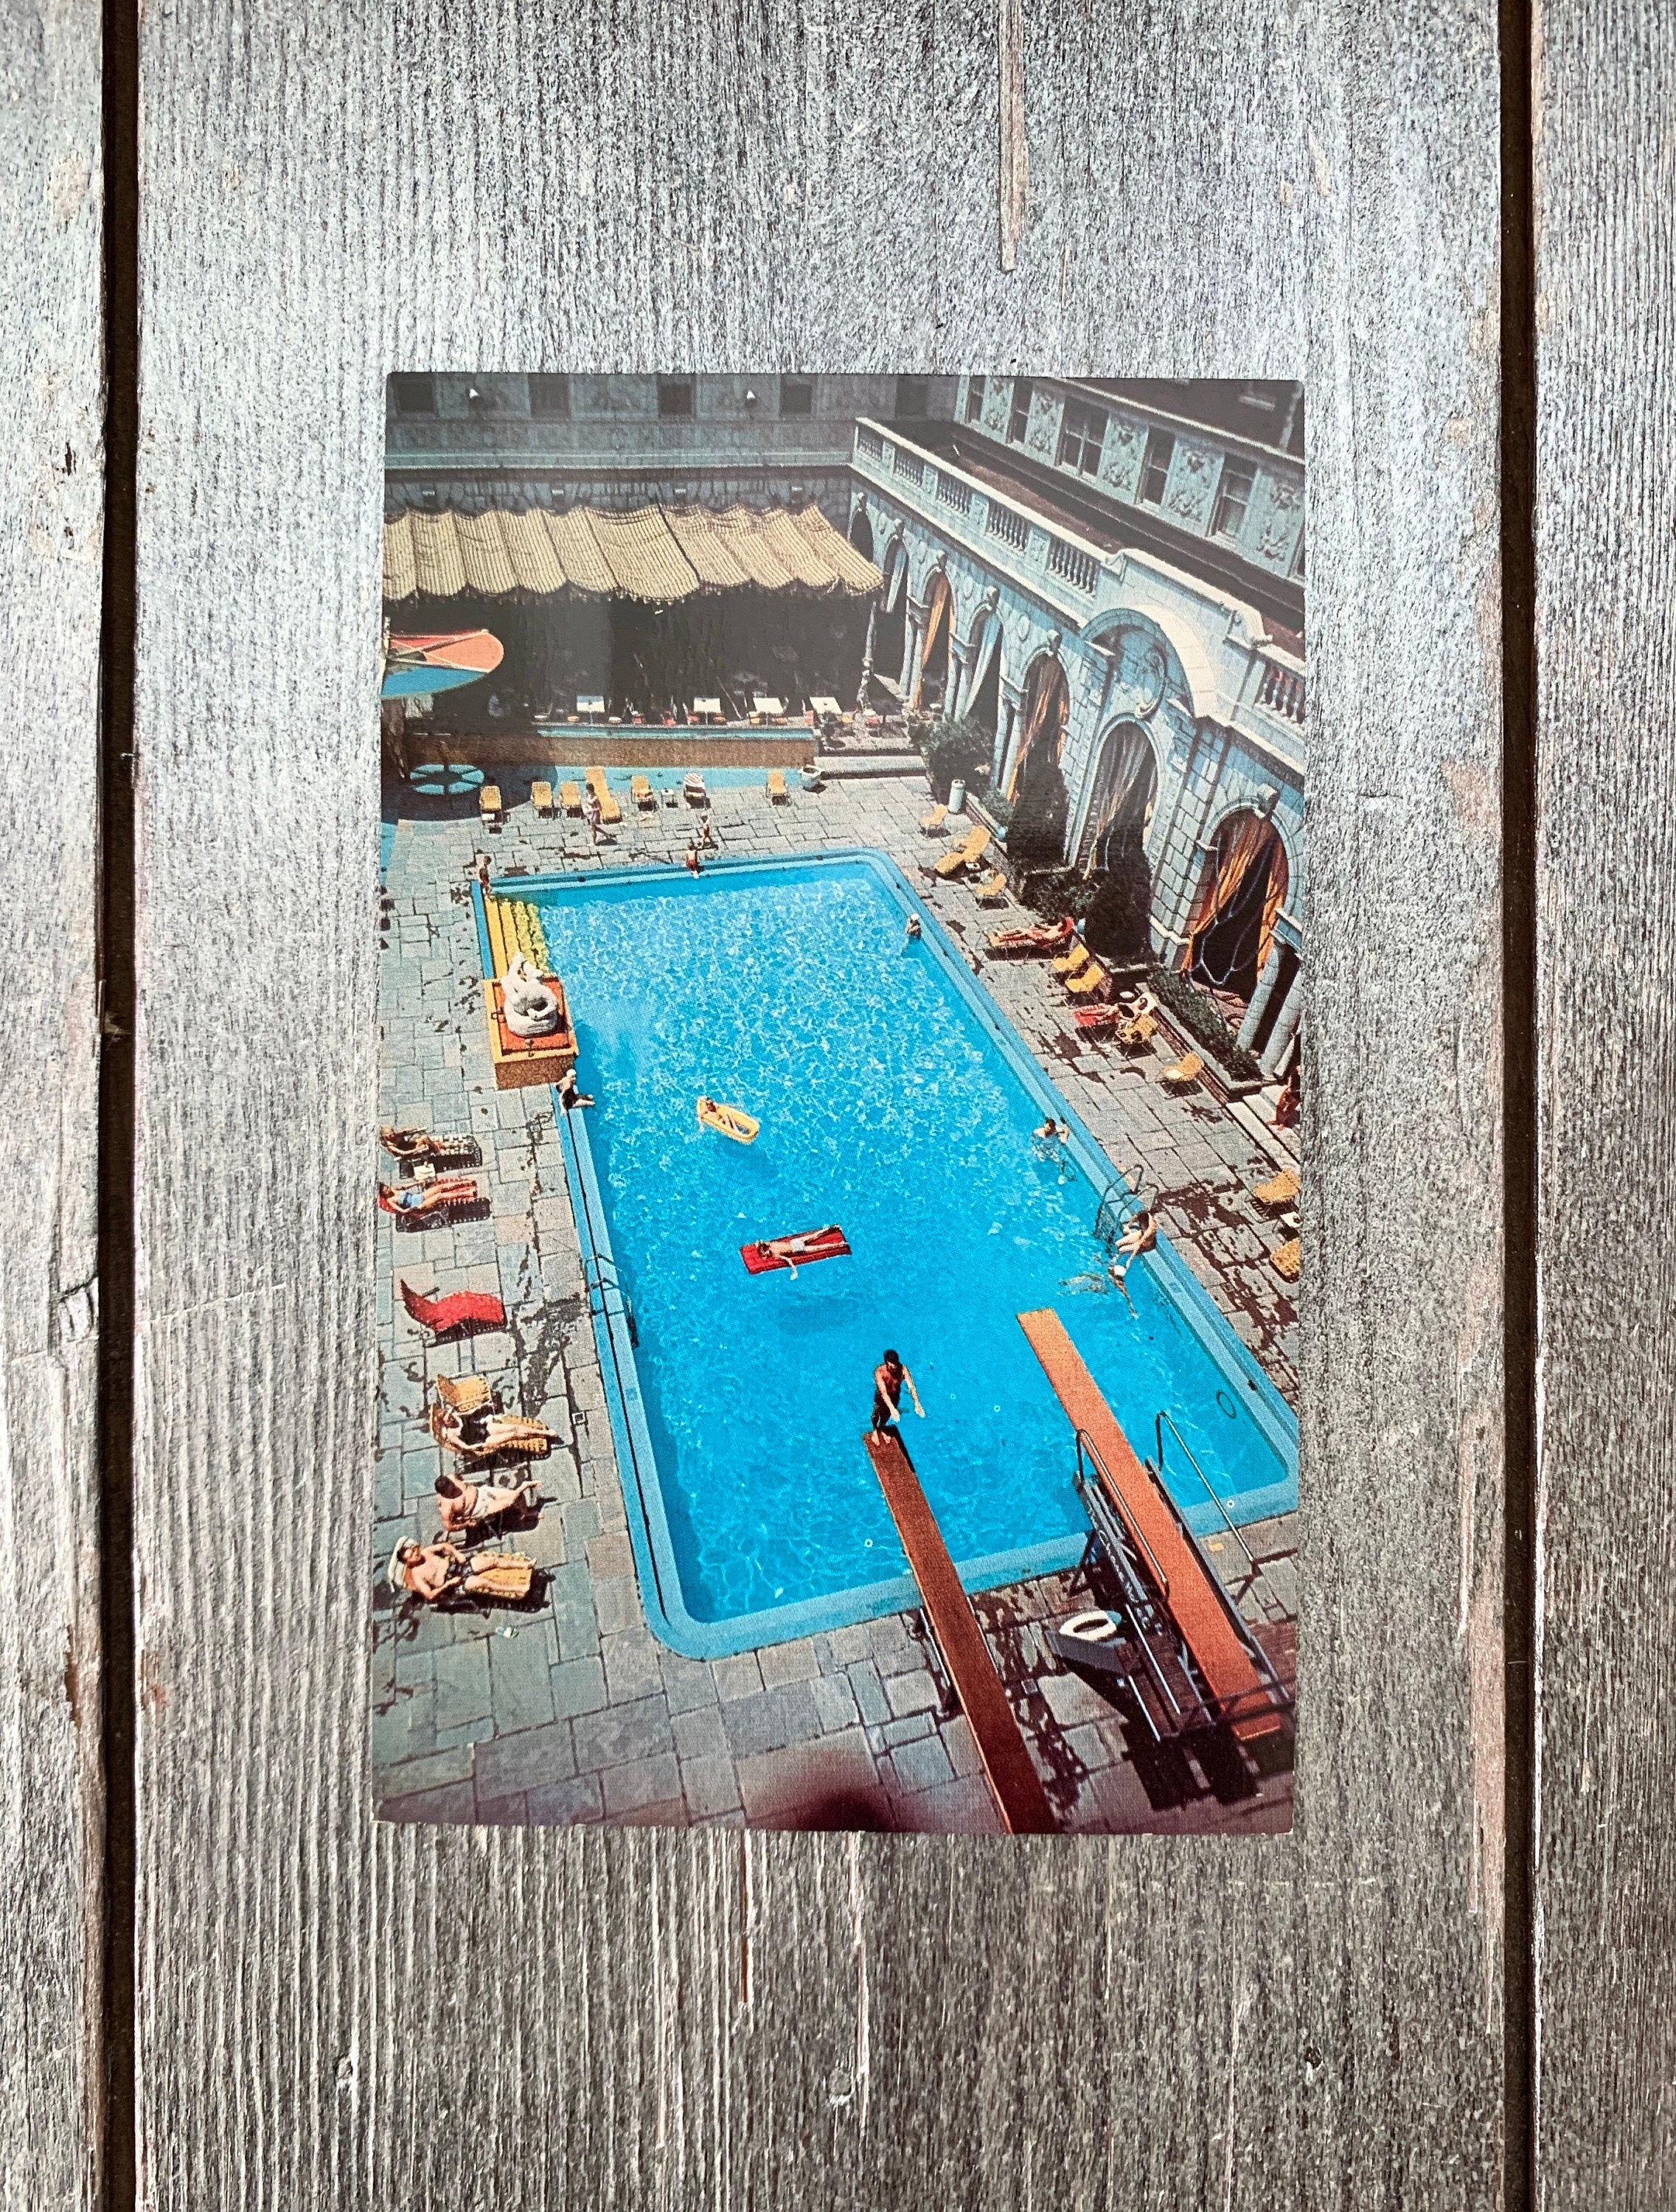 Retro Vintage Postcard, "The Sun and Swim Club Pool, Chase-Park Plaza Hotel", Saint Louis, Missouri